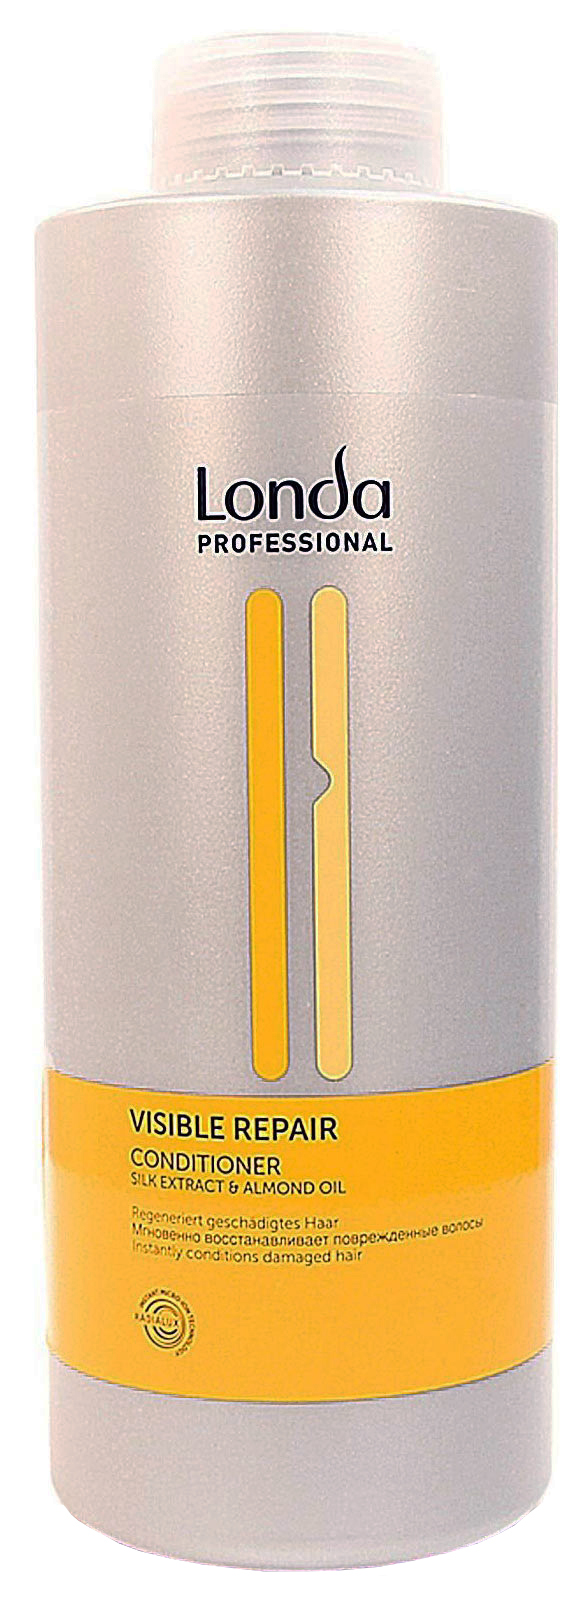 Кондиционер для волос Londa Professional Visible Repair 1000 мл кондиционер для волос londa visible repair conditioner balm 250 мл